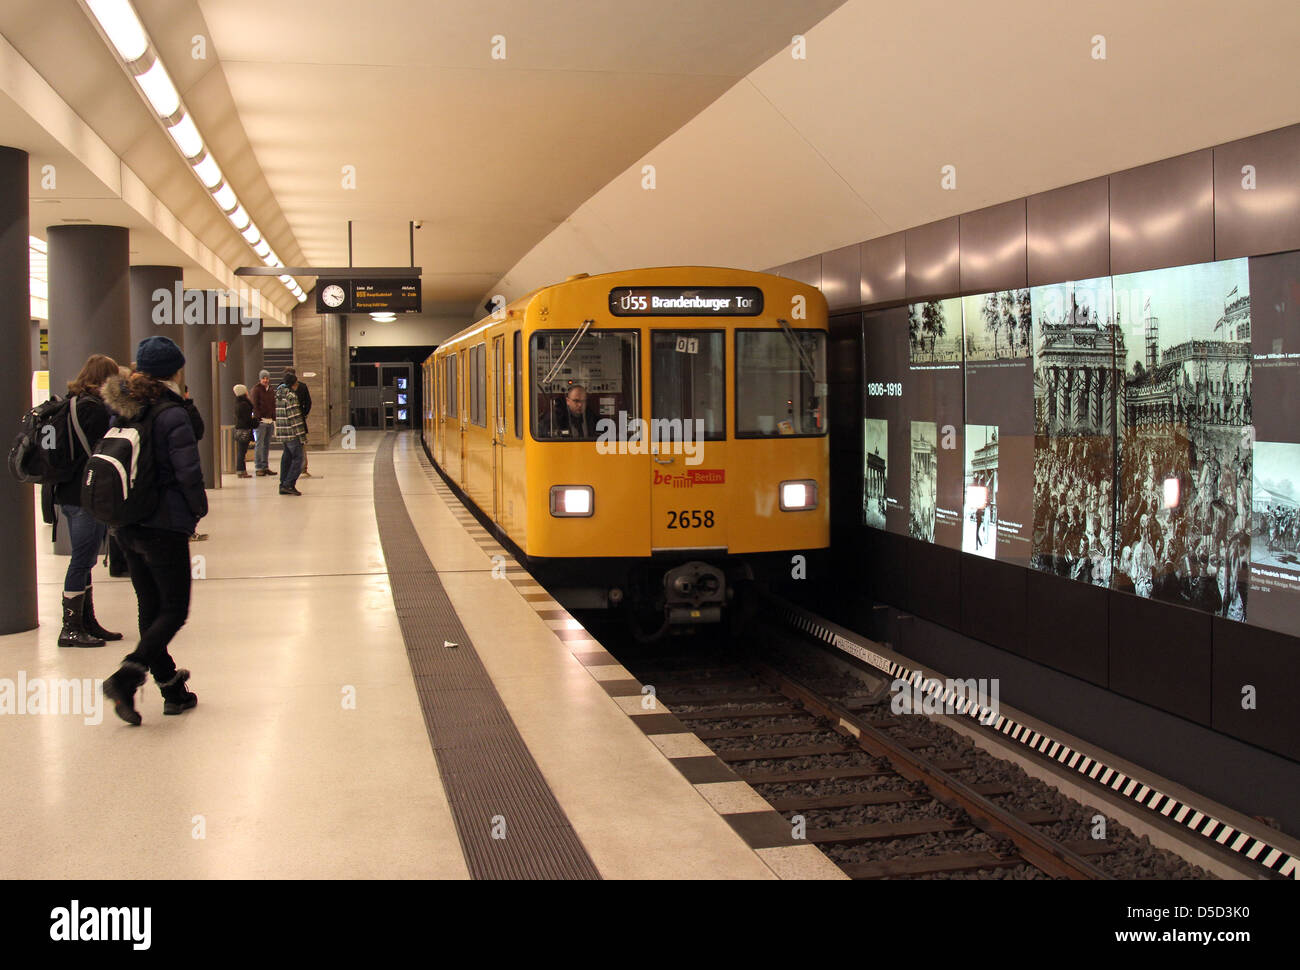 Berlin, Germany, subway line U55 in the station Brandenburger Tor Stock Photo